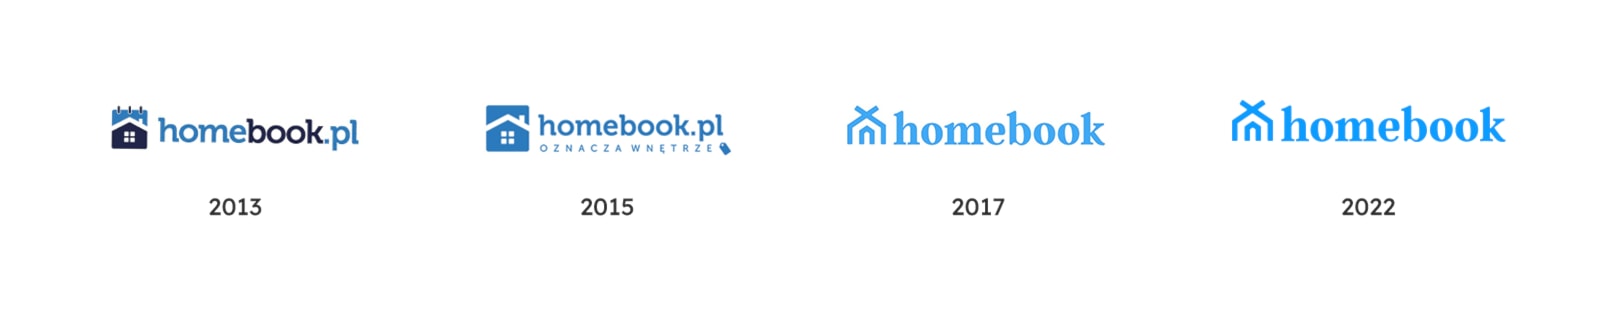 Rebranding Homebook.pl